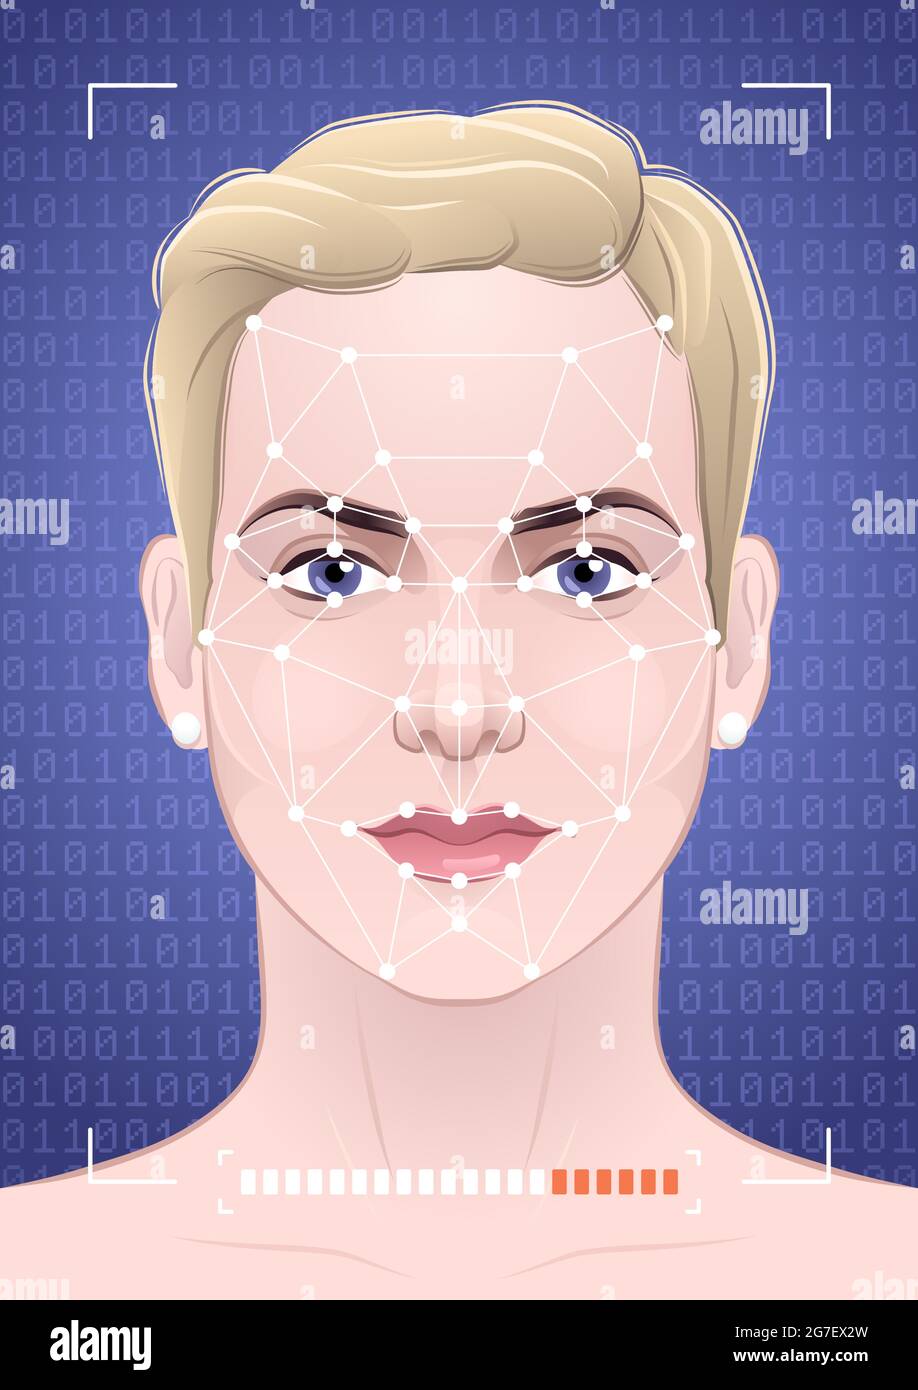 Biometric Facial Recognition Stock Vector